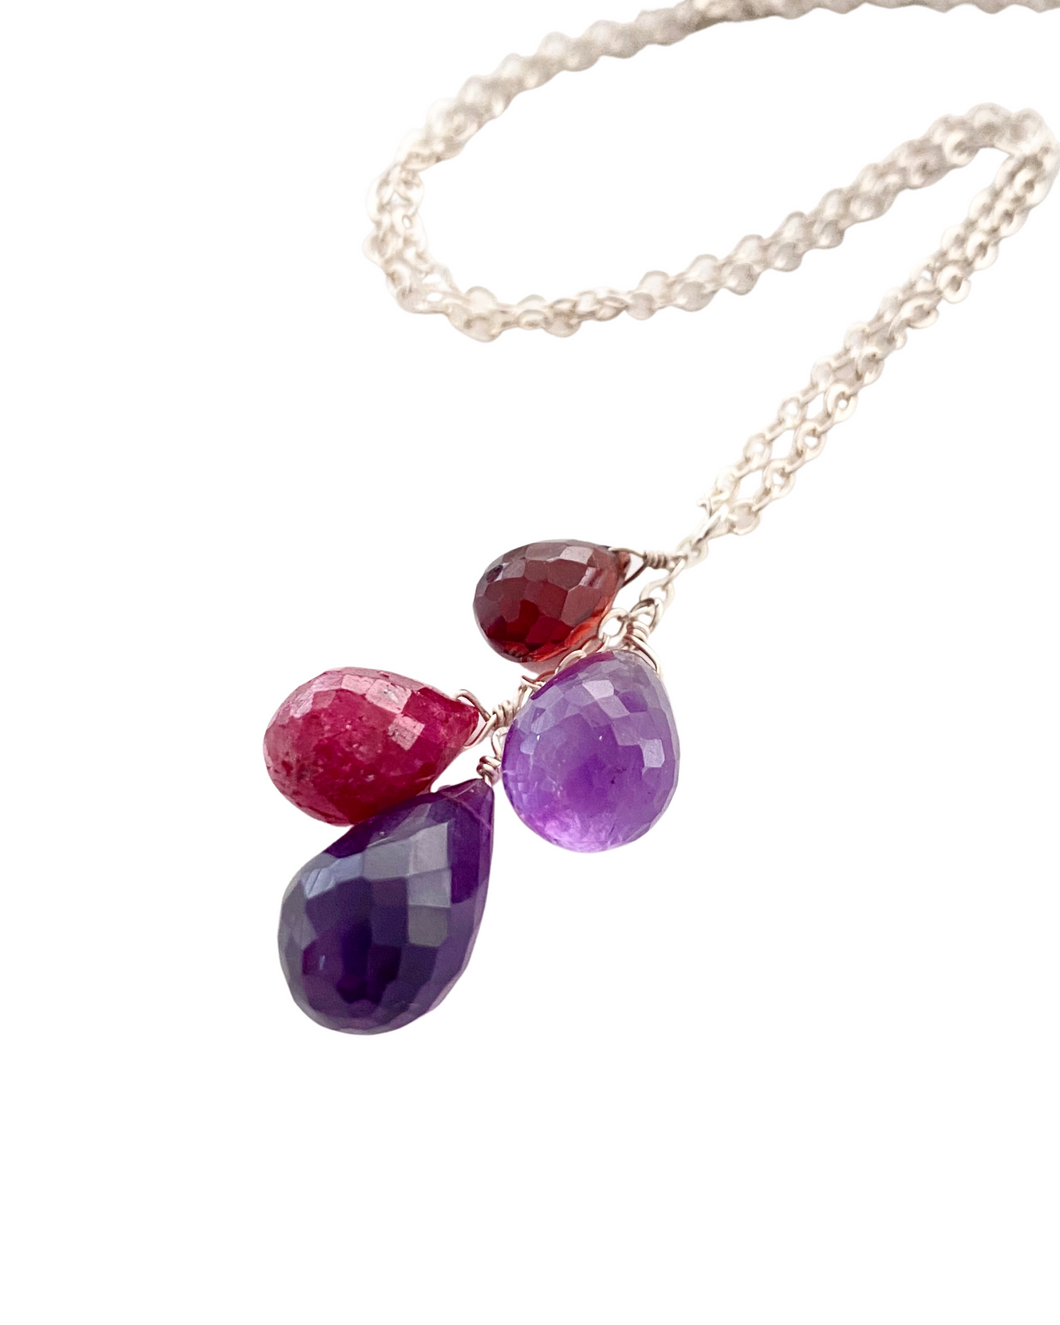 Multi Gemstone Necklace. Ruby, Garnet, Amethyst Pendant. Sterling Silver Necklace.